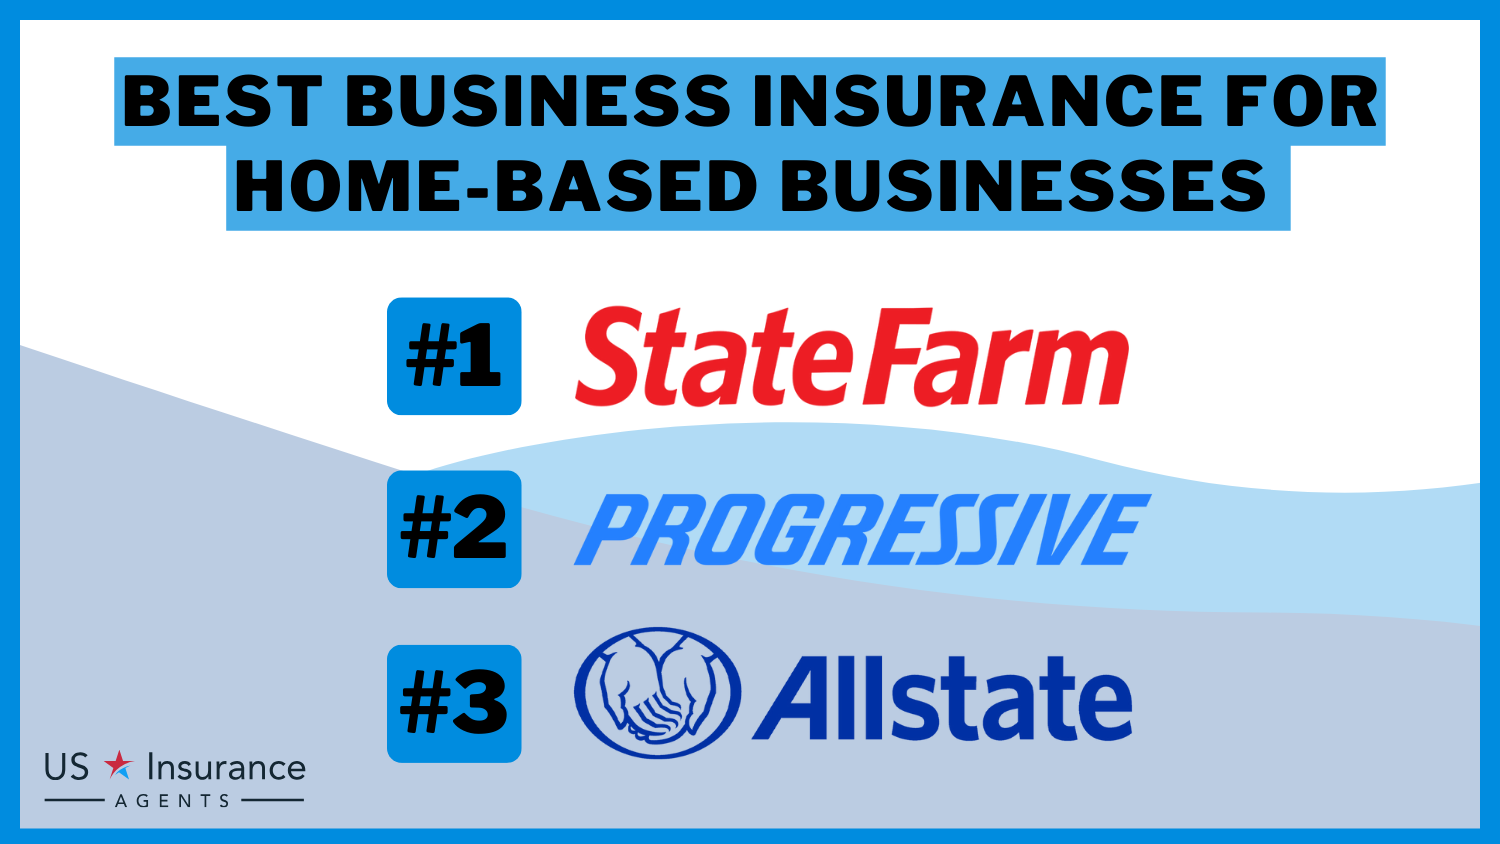 State Farm, Progressive, Allstate: Best Business Insurance for Home-Based Businesses